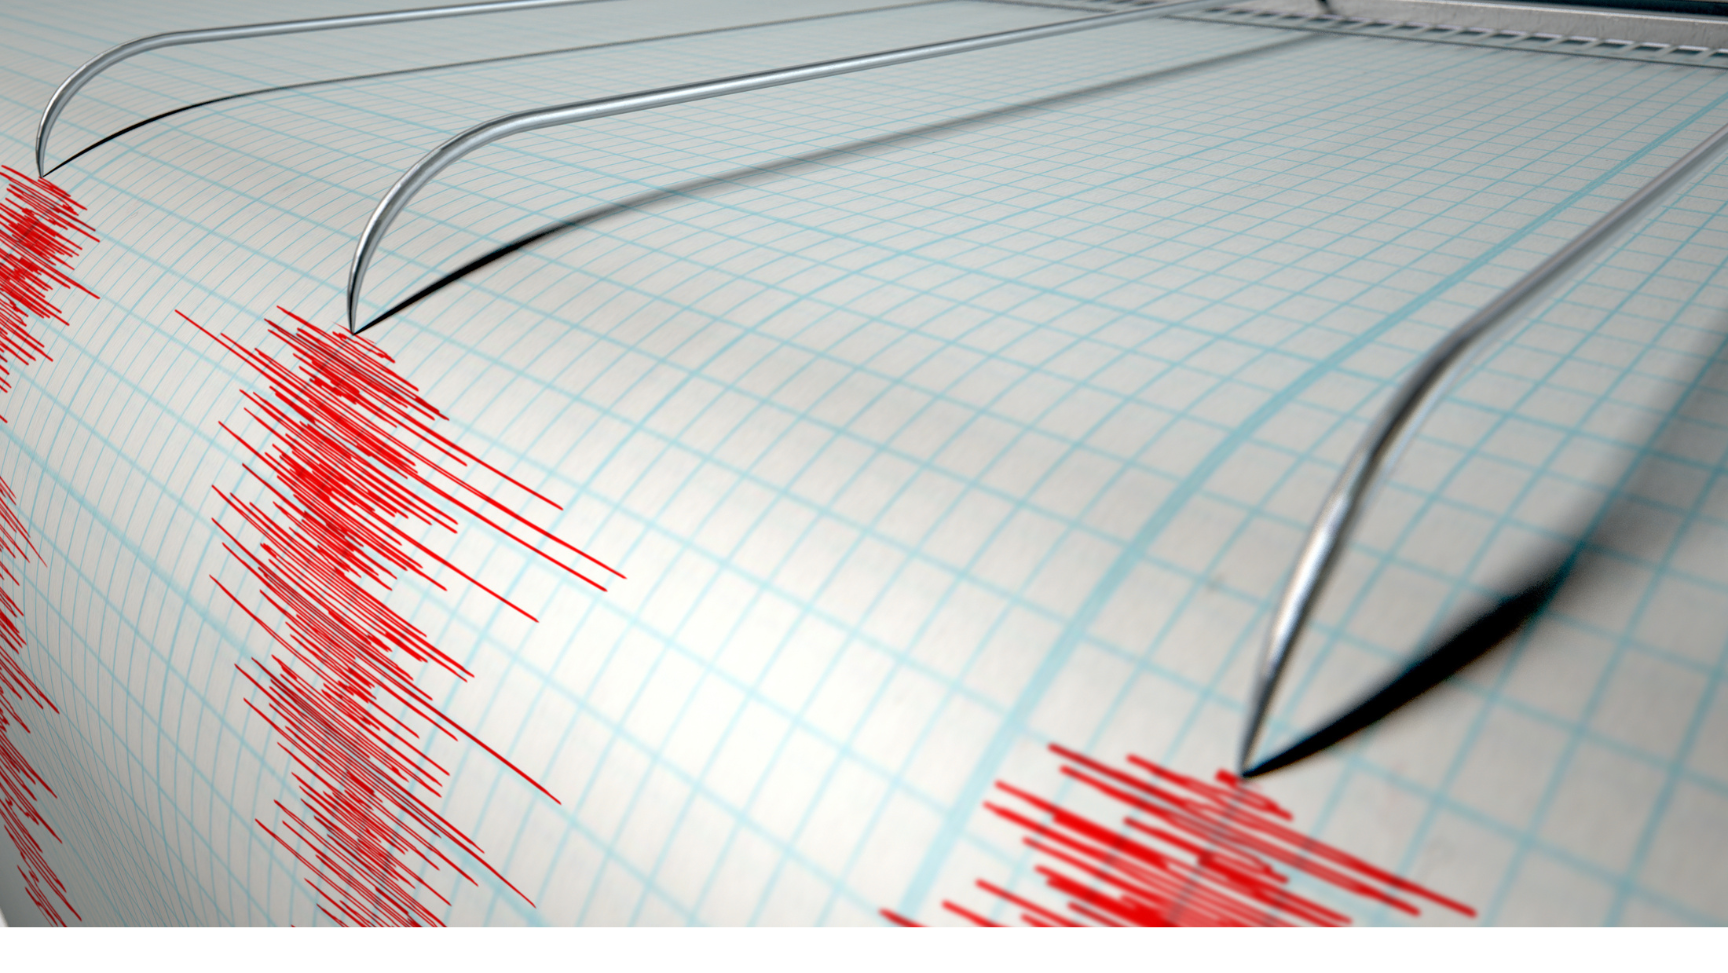  Another earthquake hits Utah, near Magna 